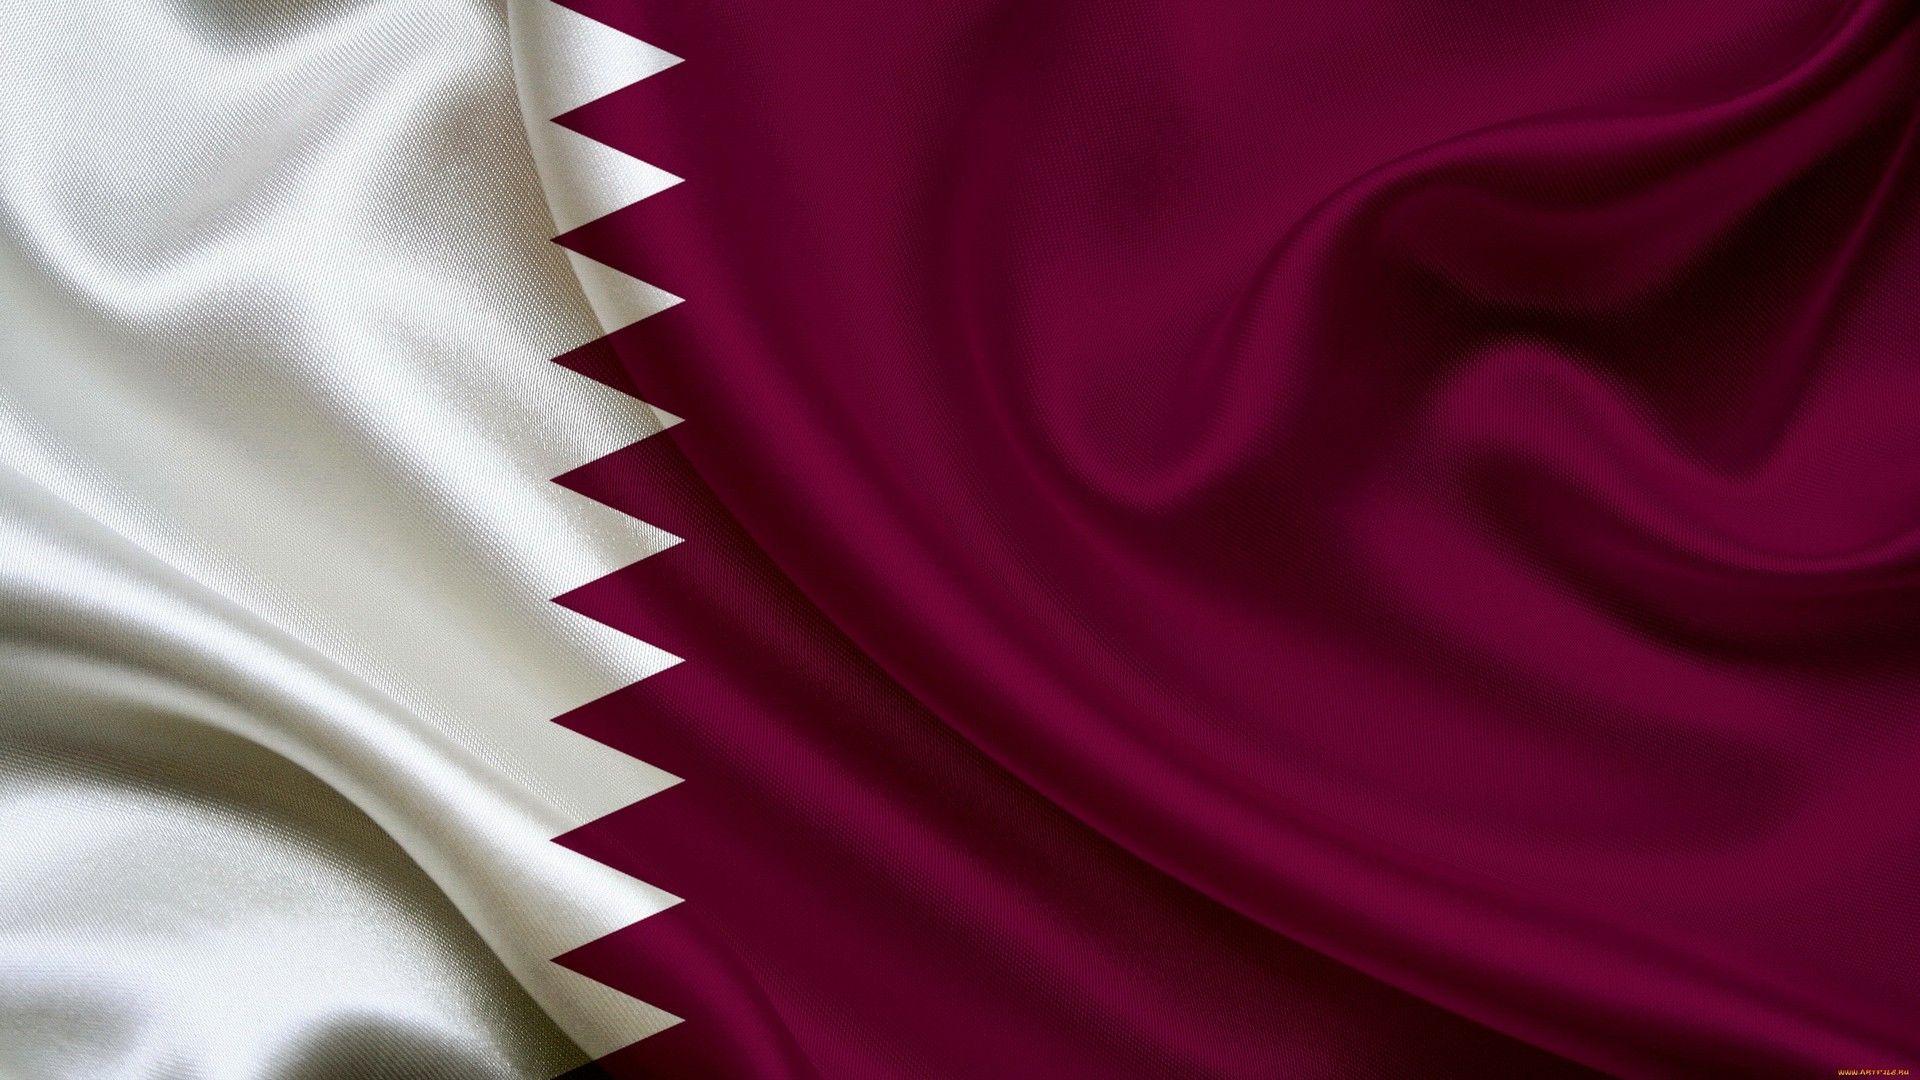 Qatar Flag Wallpapers - Top Free Qatar Flag Backgrounds ...